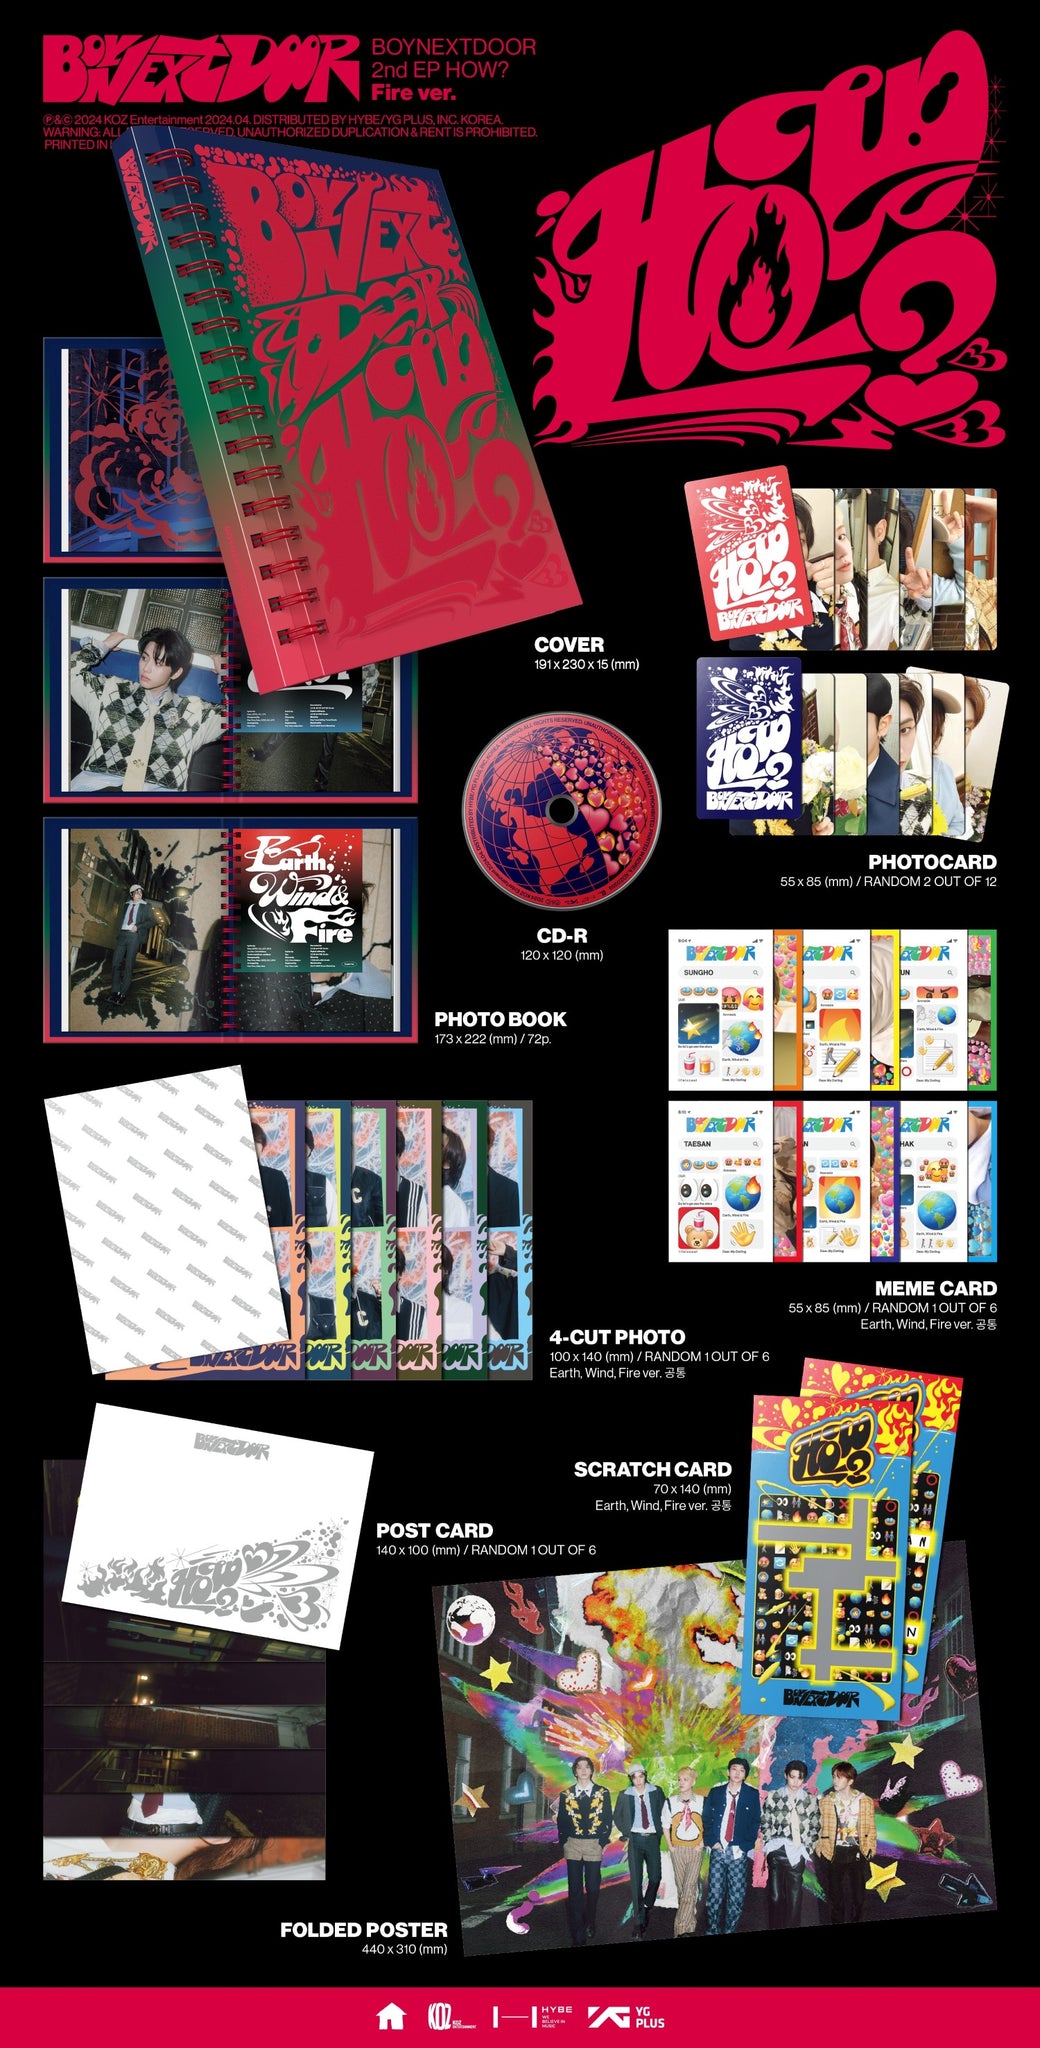 BOYNEXTDOOR 2nd EP Album HOW? - Fire Version Inclusions: Cover, Photobook, CD, Postcard, Meme Card, Photocards, 4Cut Photo, Scratch Card, Folded Poster